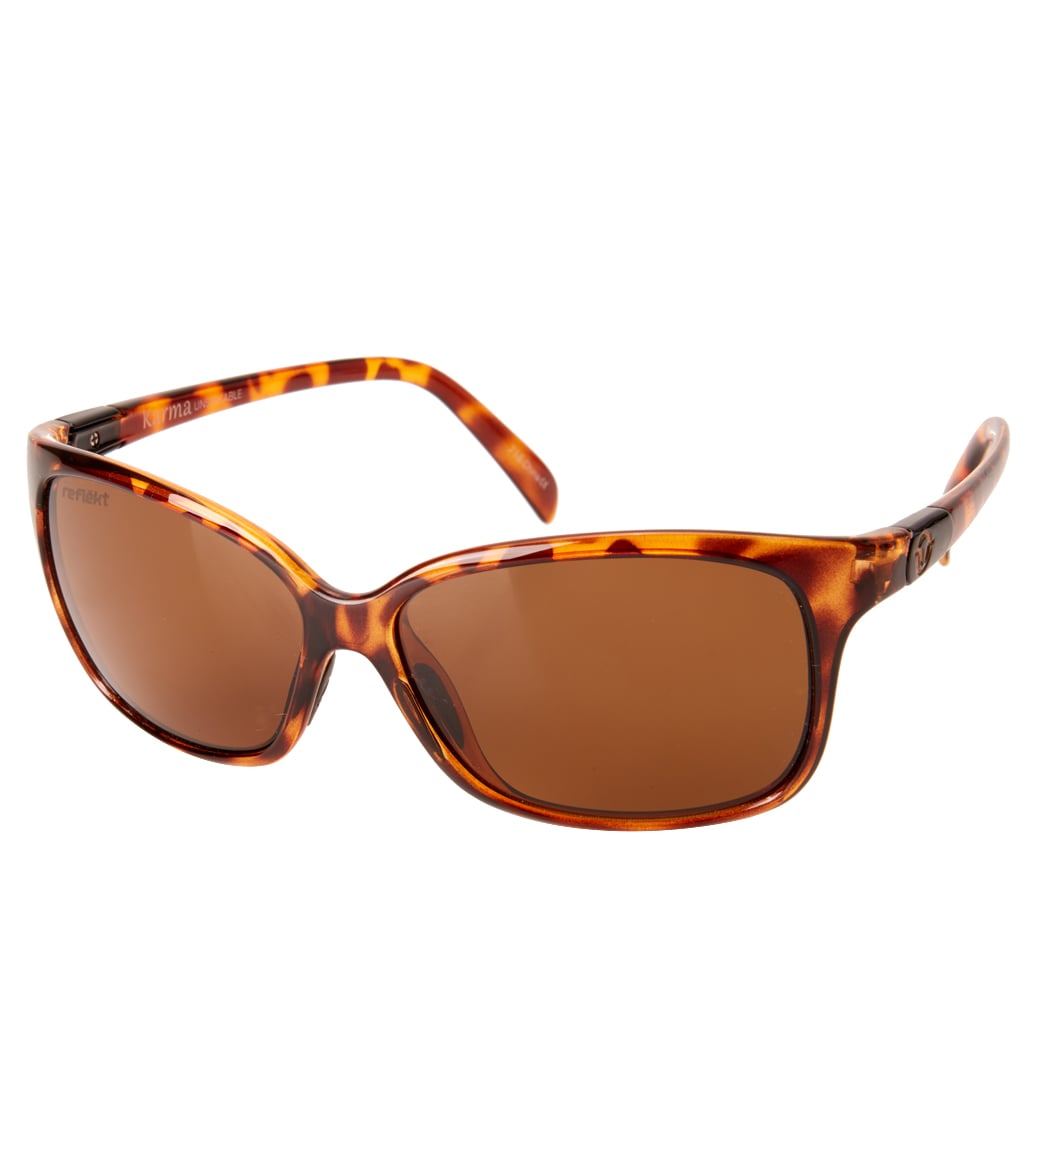 Unsinkable Polarized Karma Floating Sunglasses - Honey Tort/Brown - Swimoutlet.com